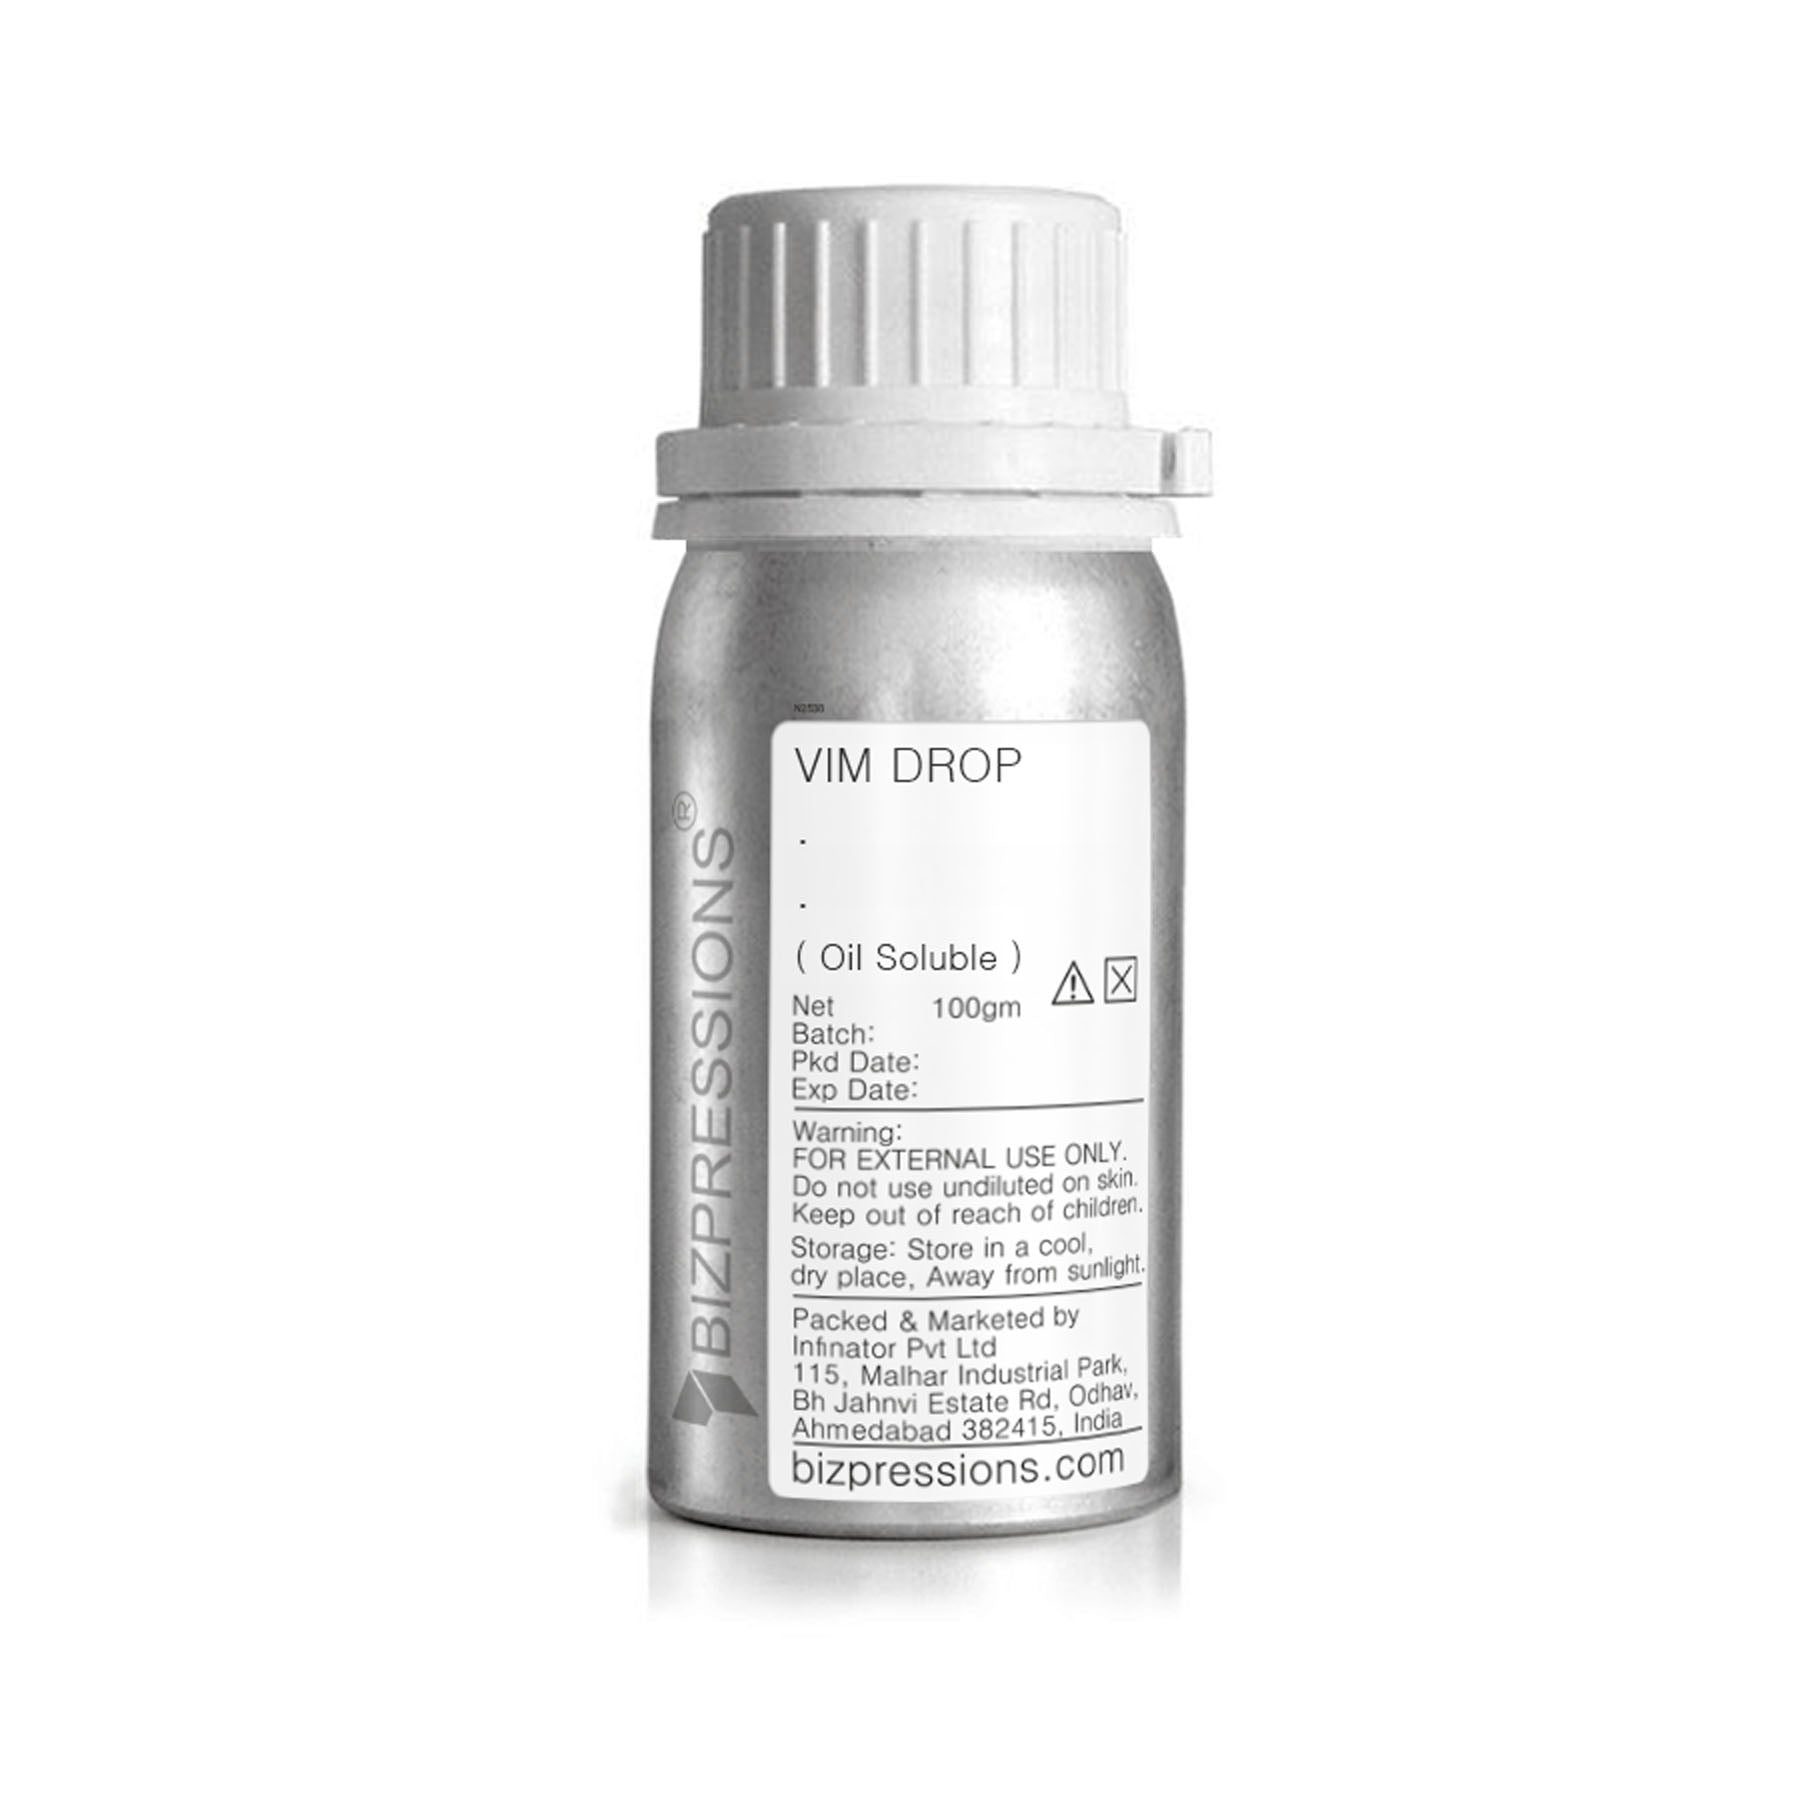 VIM DROP - Fragrance ( Oil Soluble ) - 100 gm